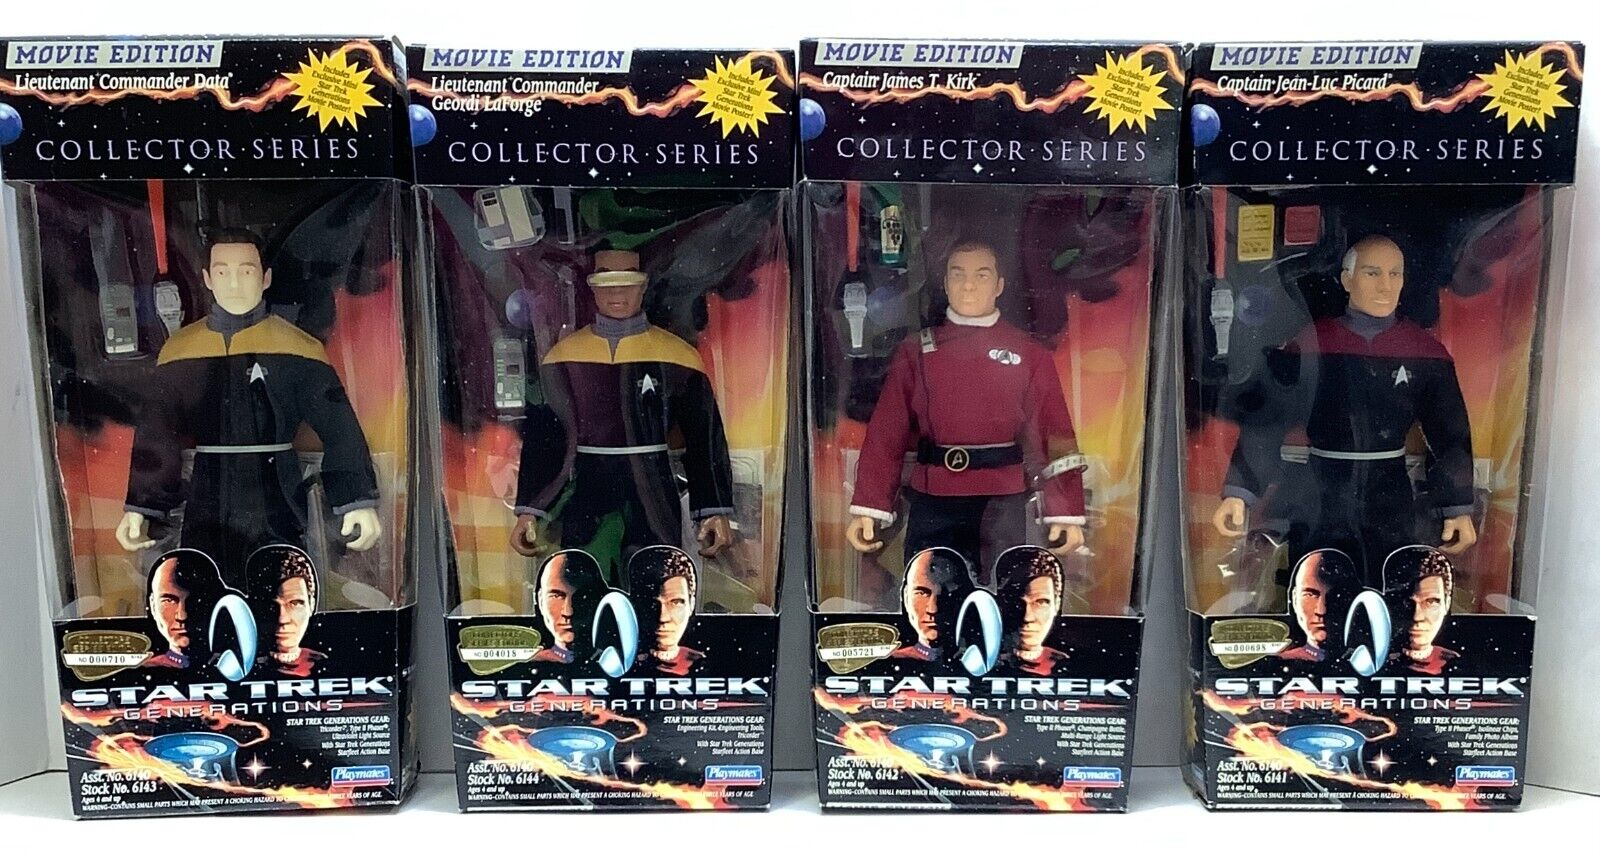 1994 Playmates Star Trek Movie Edition Collector Series 9" Figures~Lot of 4~NIB~ Playmates